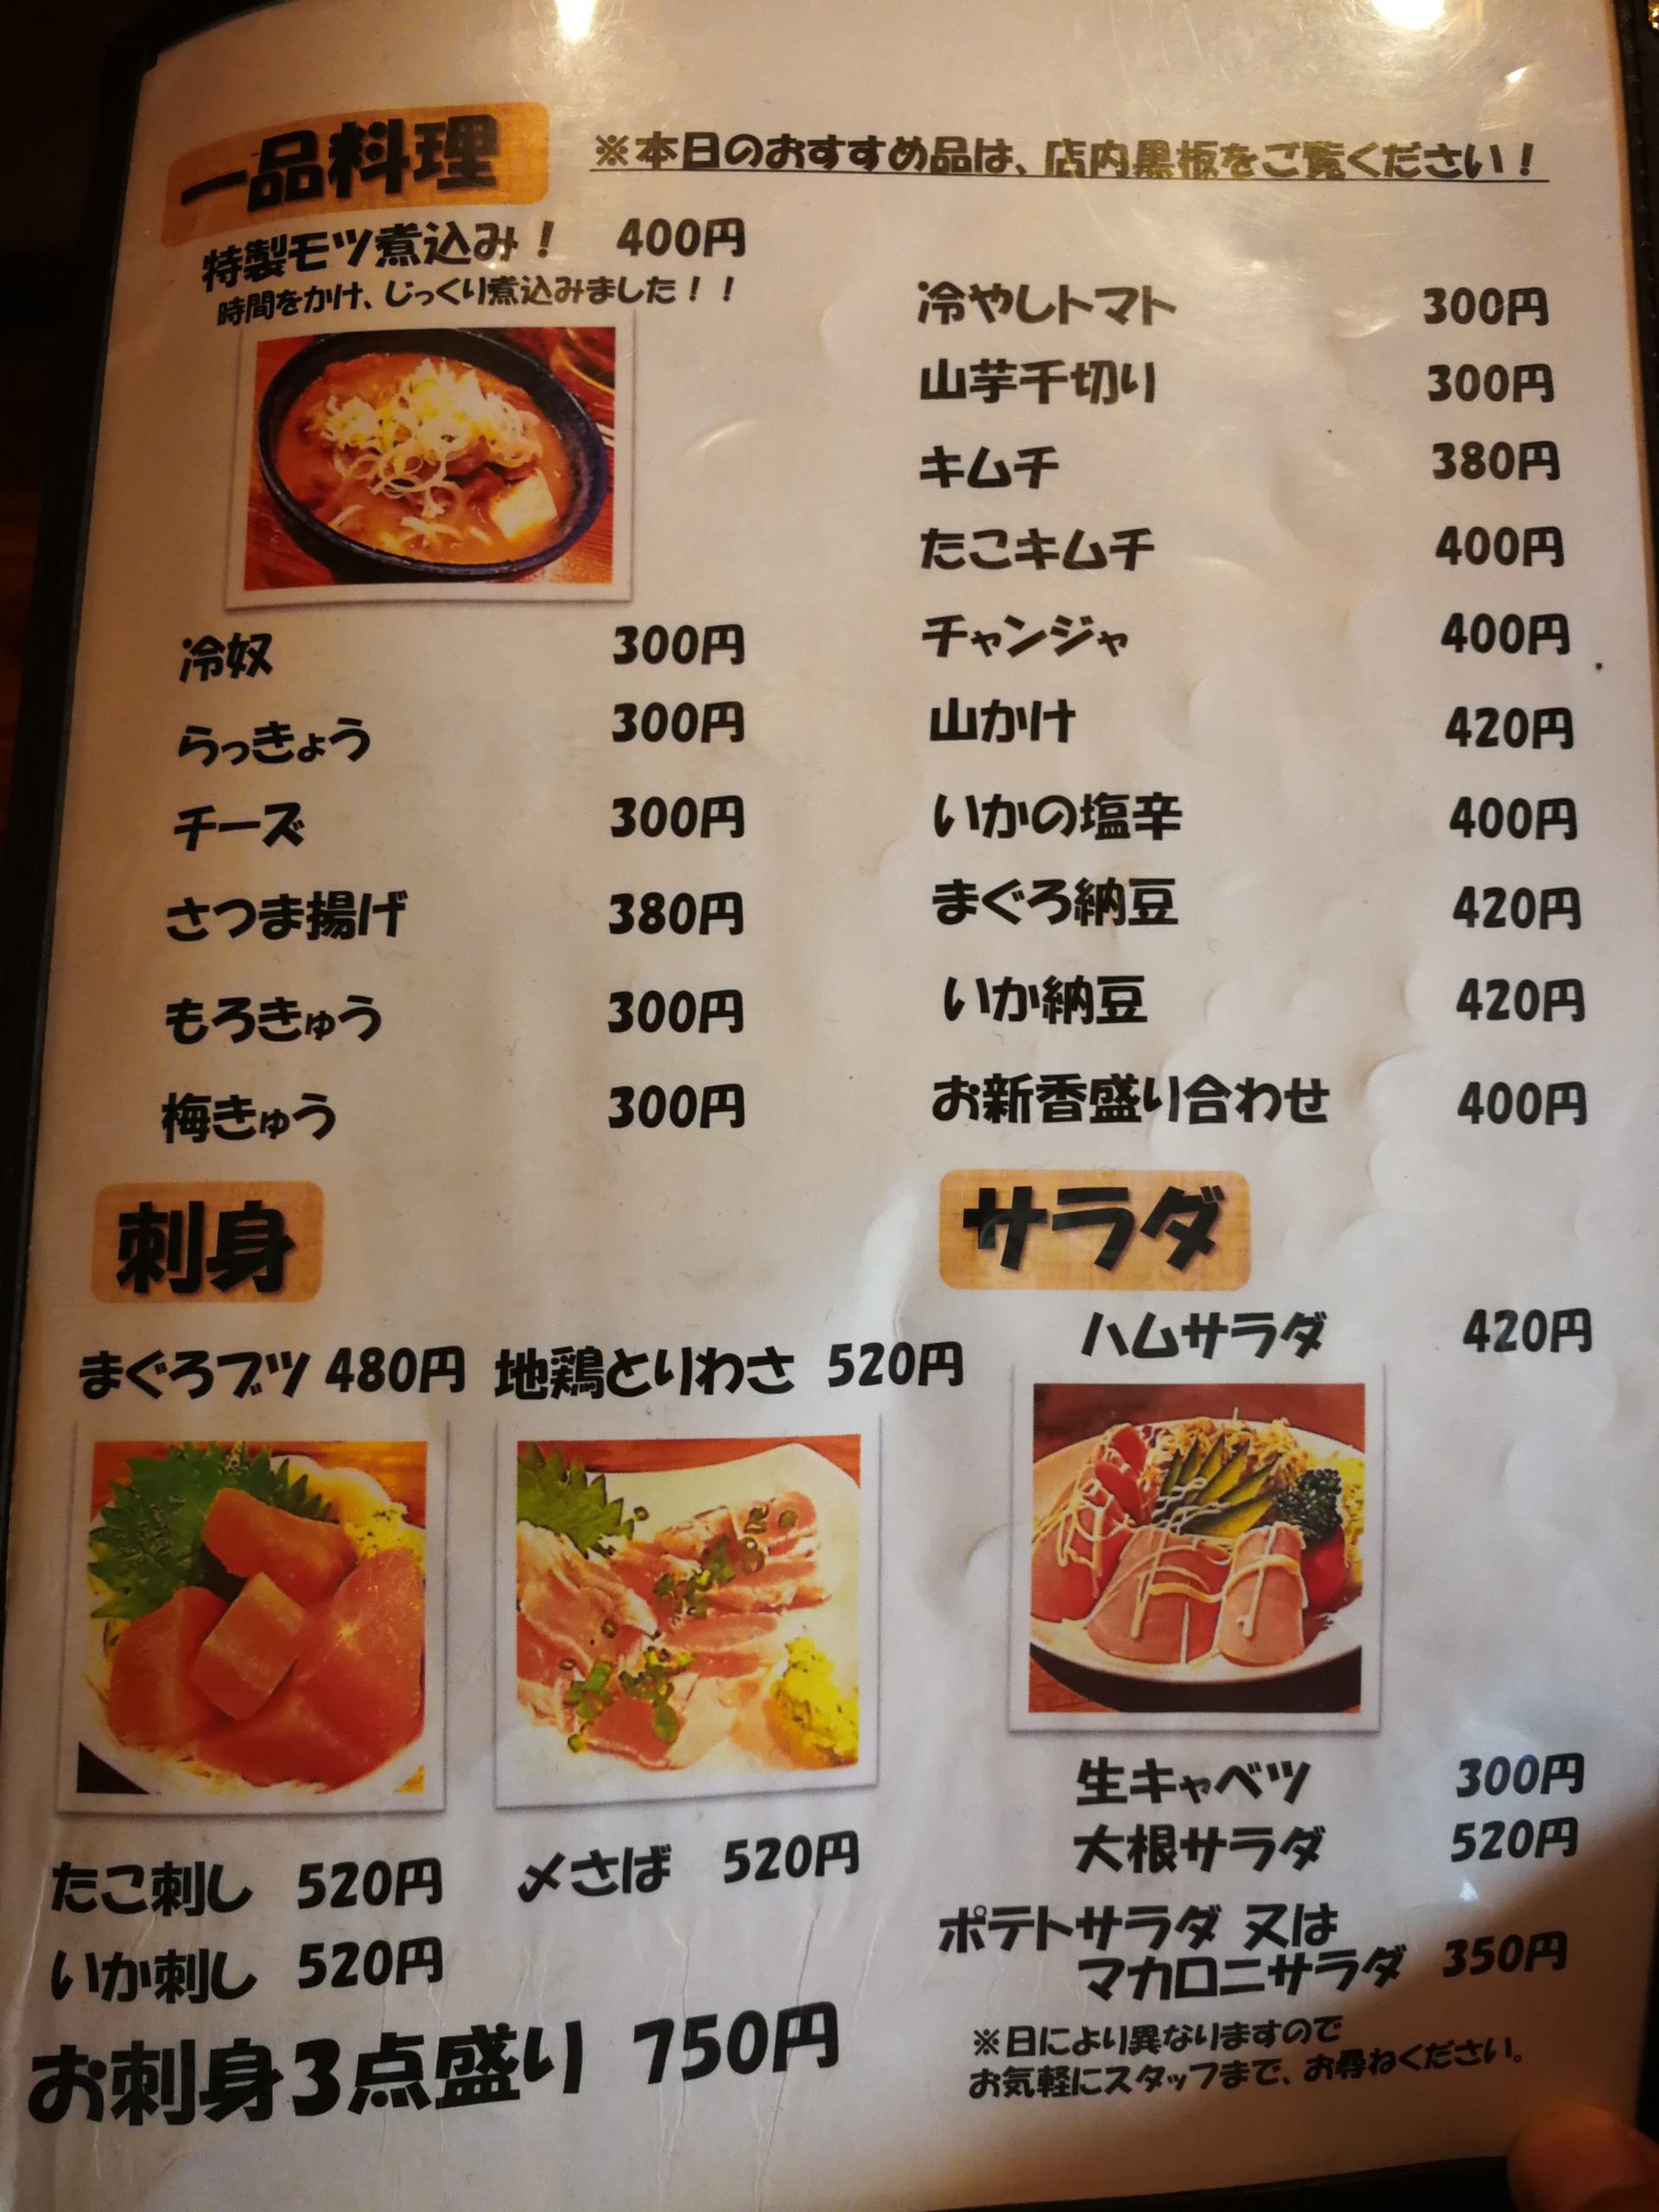 kikuya-sengawa-menu-01